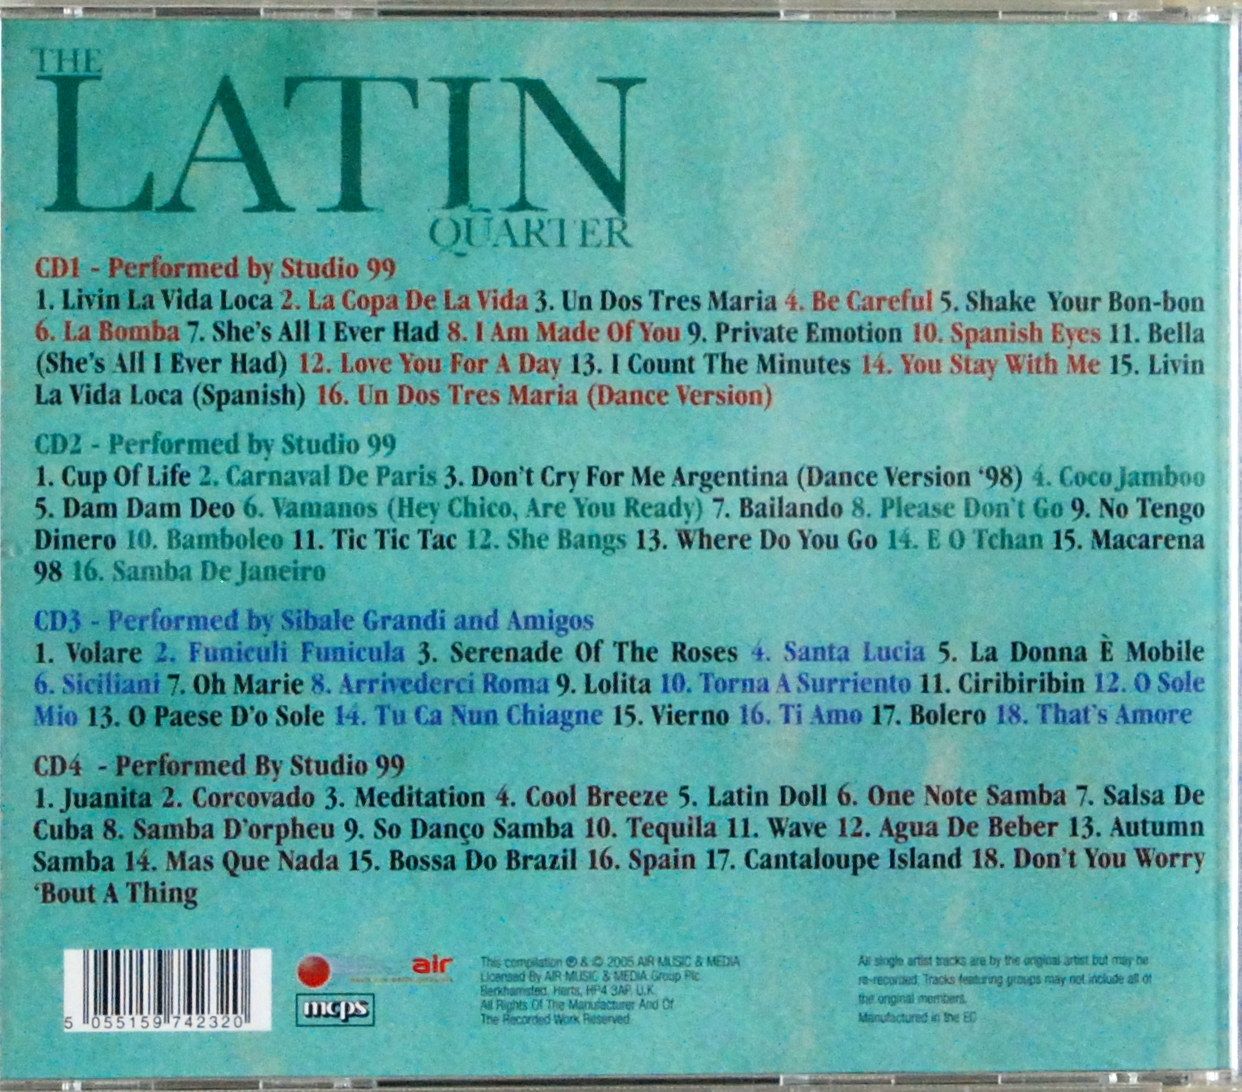 VA - The Latin Quarter 4CD